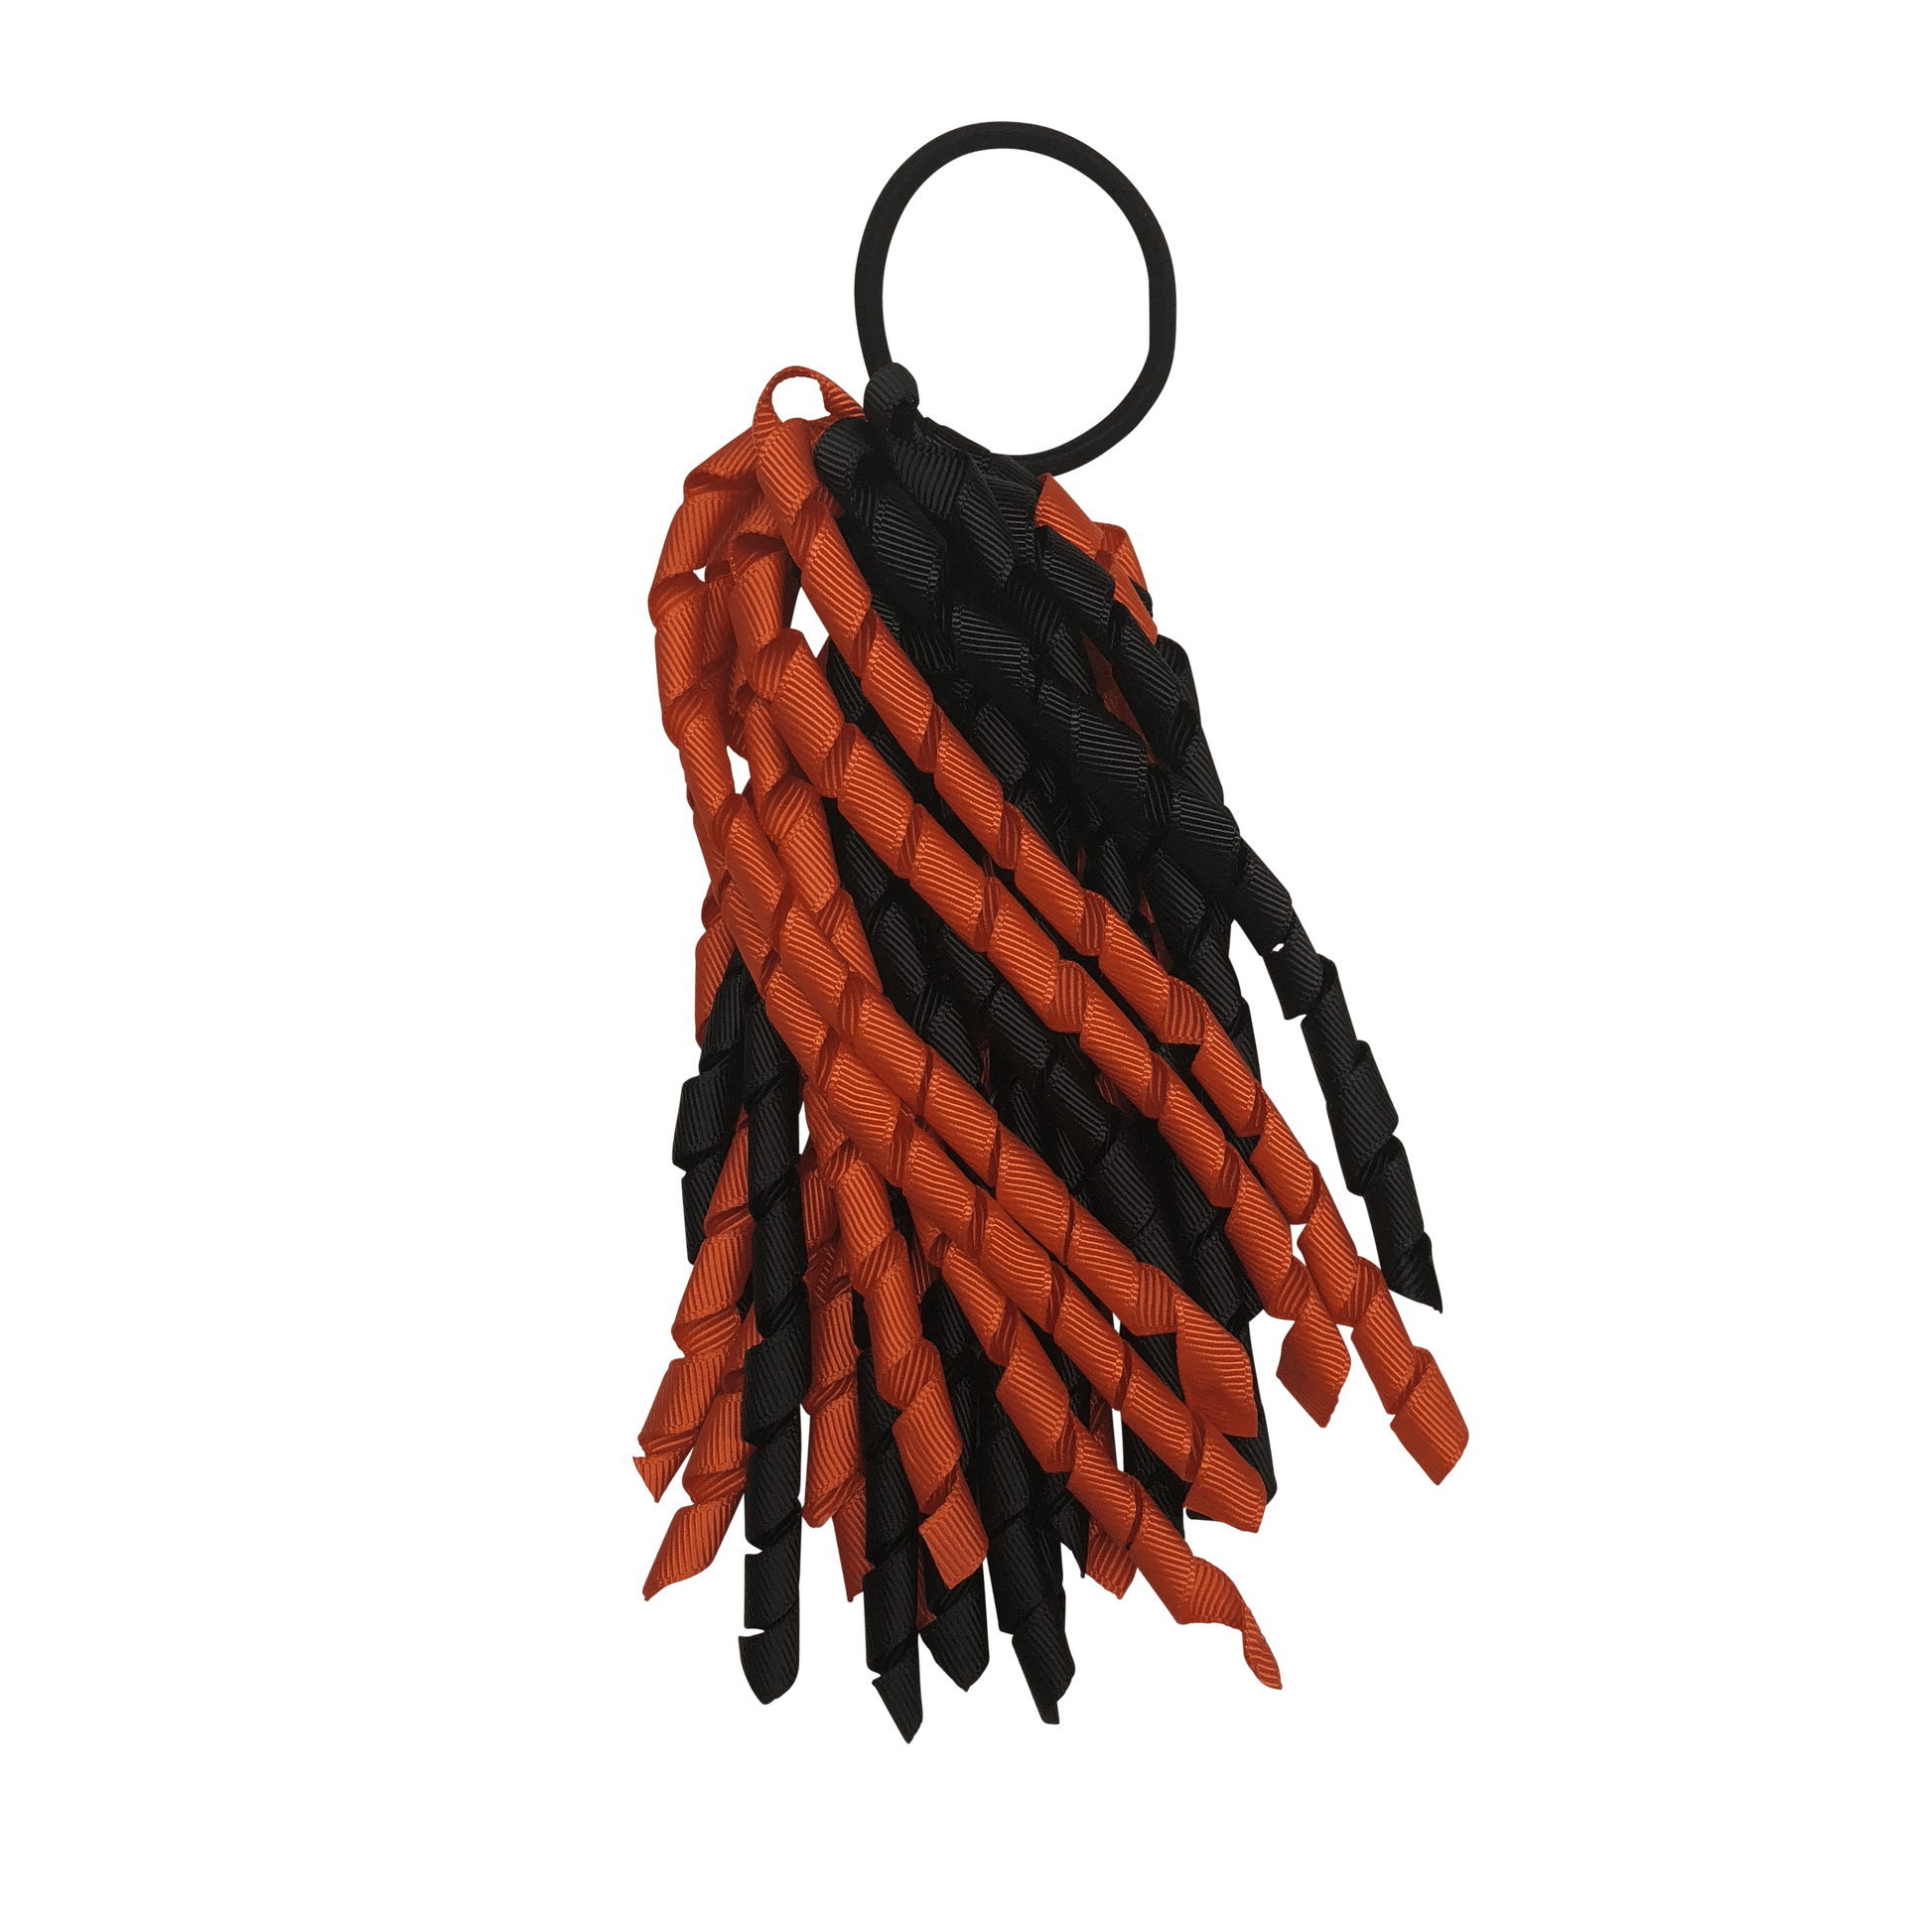 Orange & Black Hair Accessories - Assorted Hair Accessories - School Uniform Hair Accessories - Ponytails and Fairytales